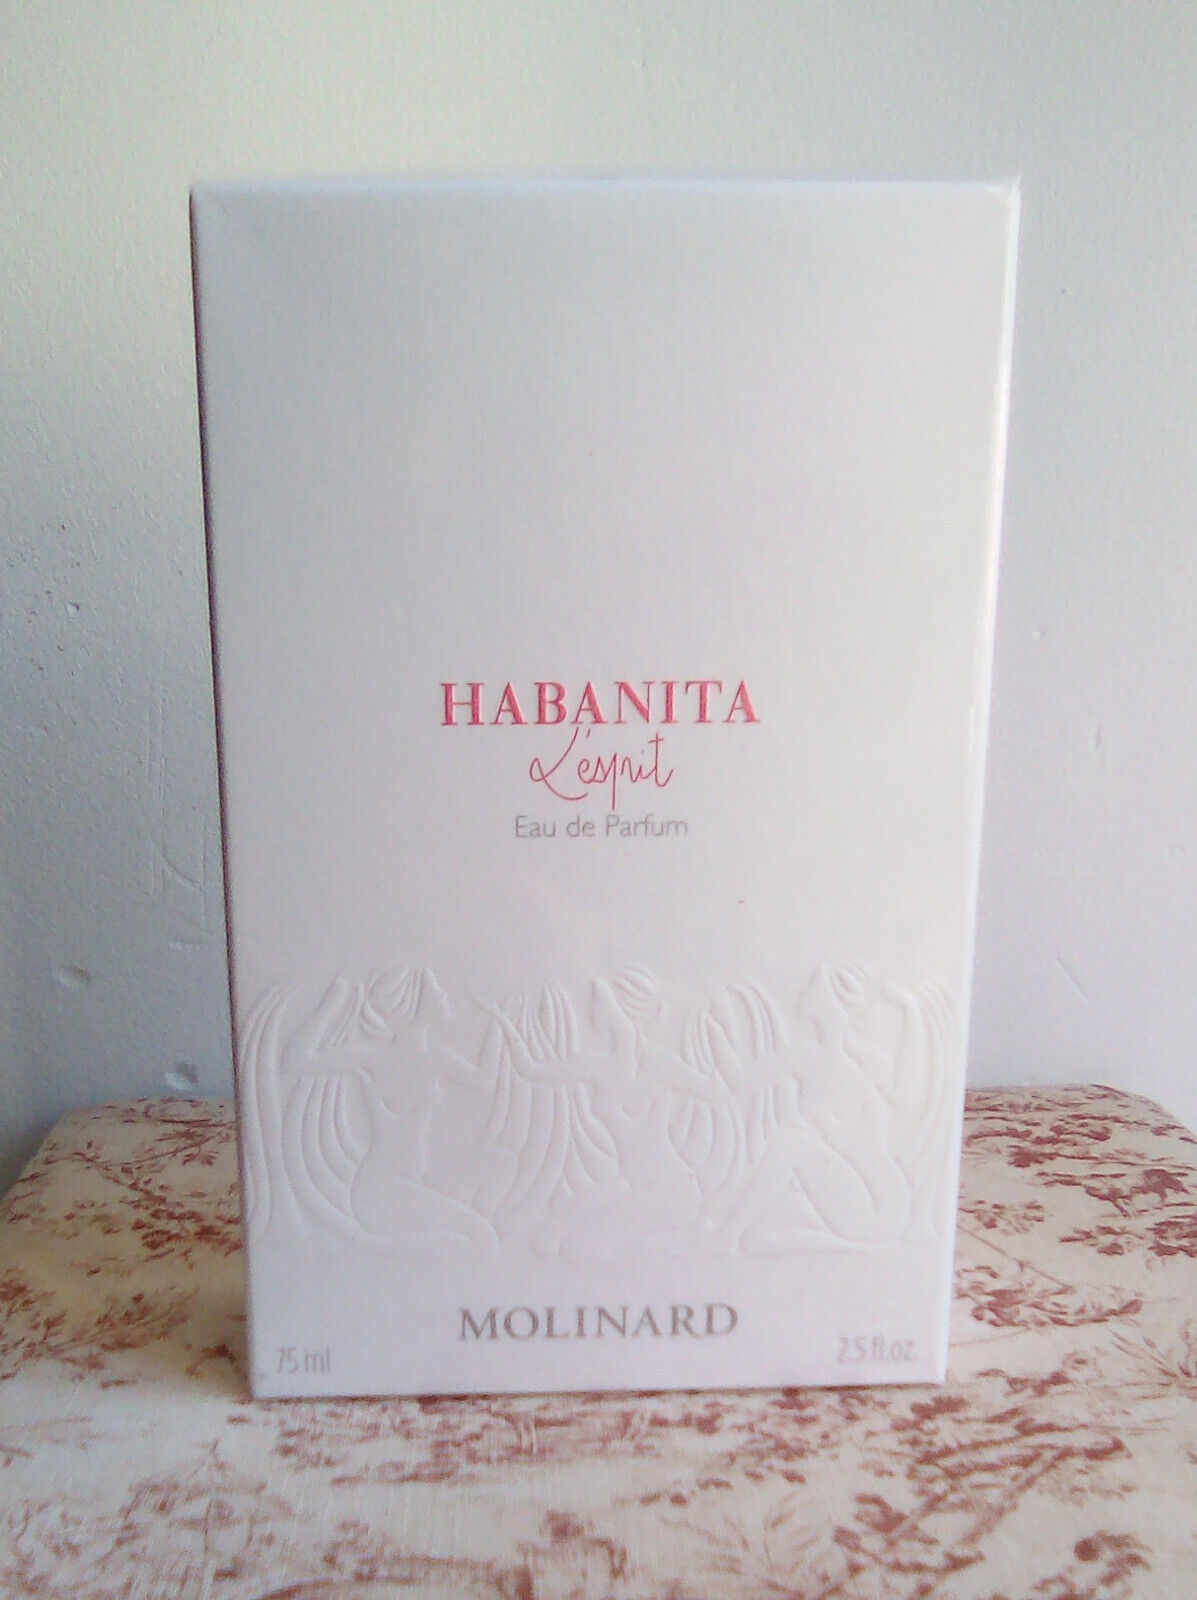 Habanîta L\'esprît - Molînard - eau de parfum 75ml new blister